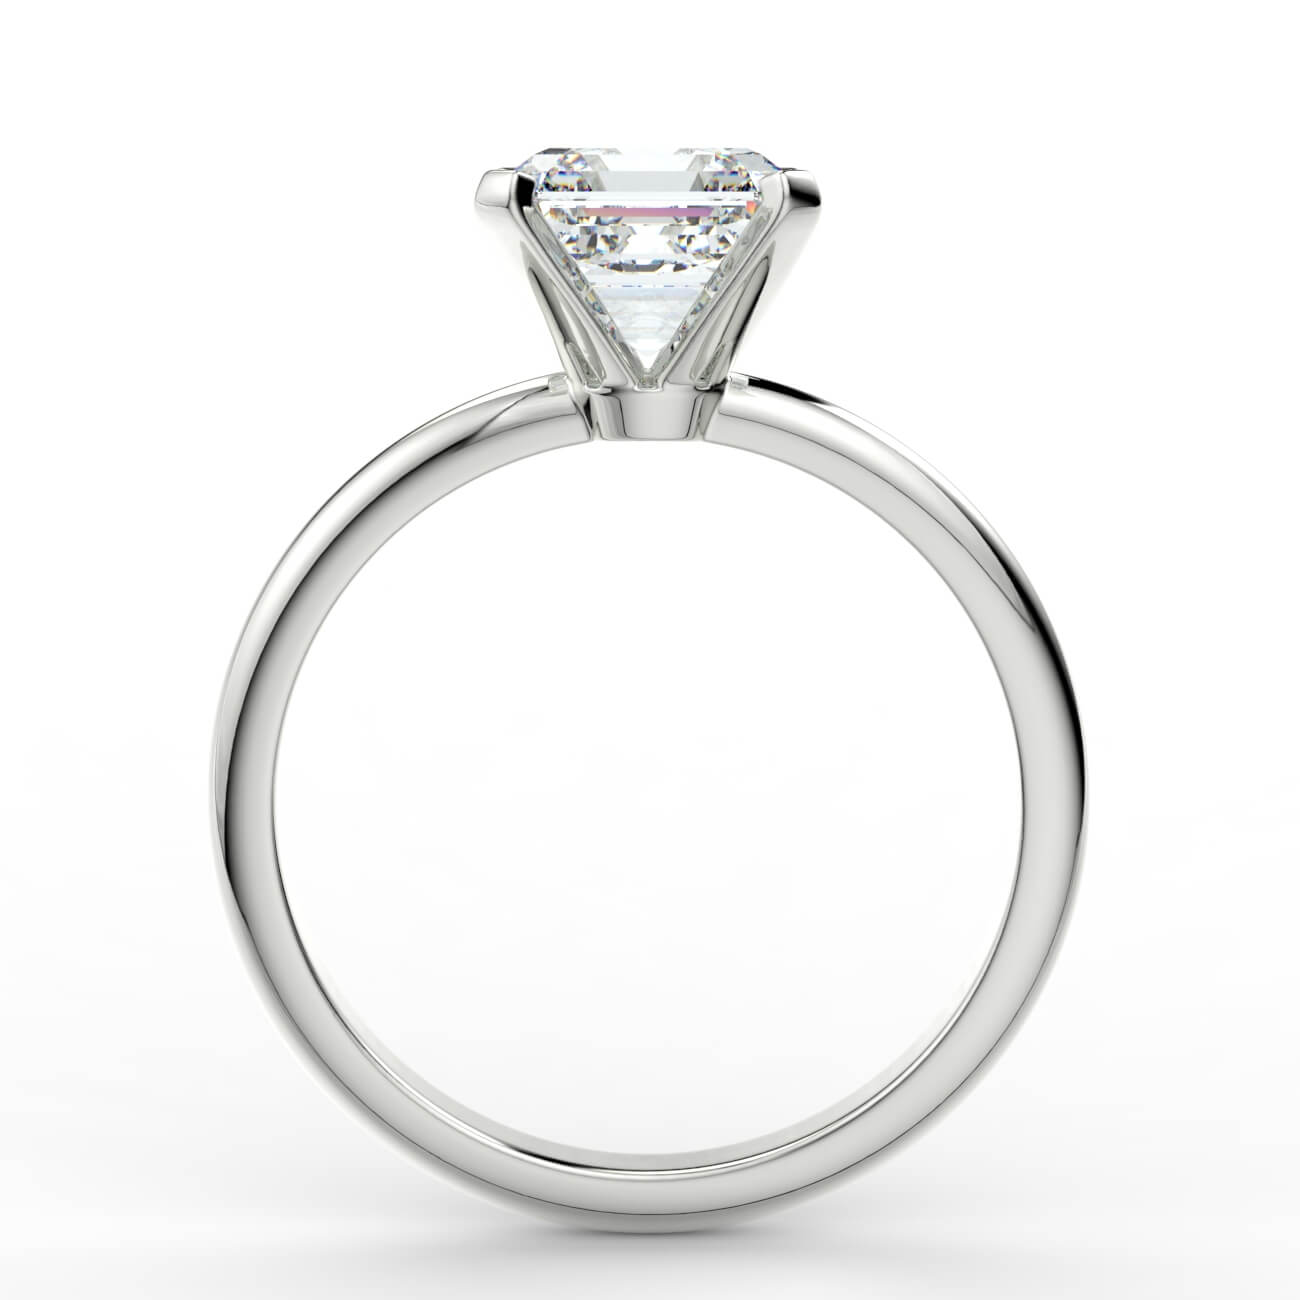 Knife-edge solitaire asscher cut diamond engagement ring in white gold – Australian Diamond Network